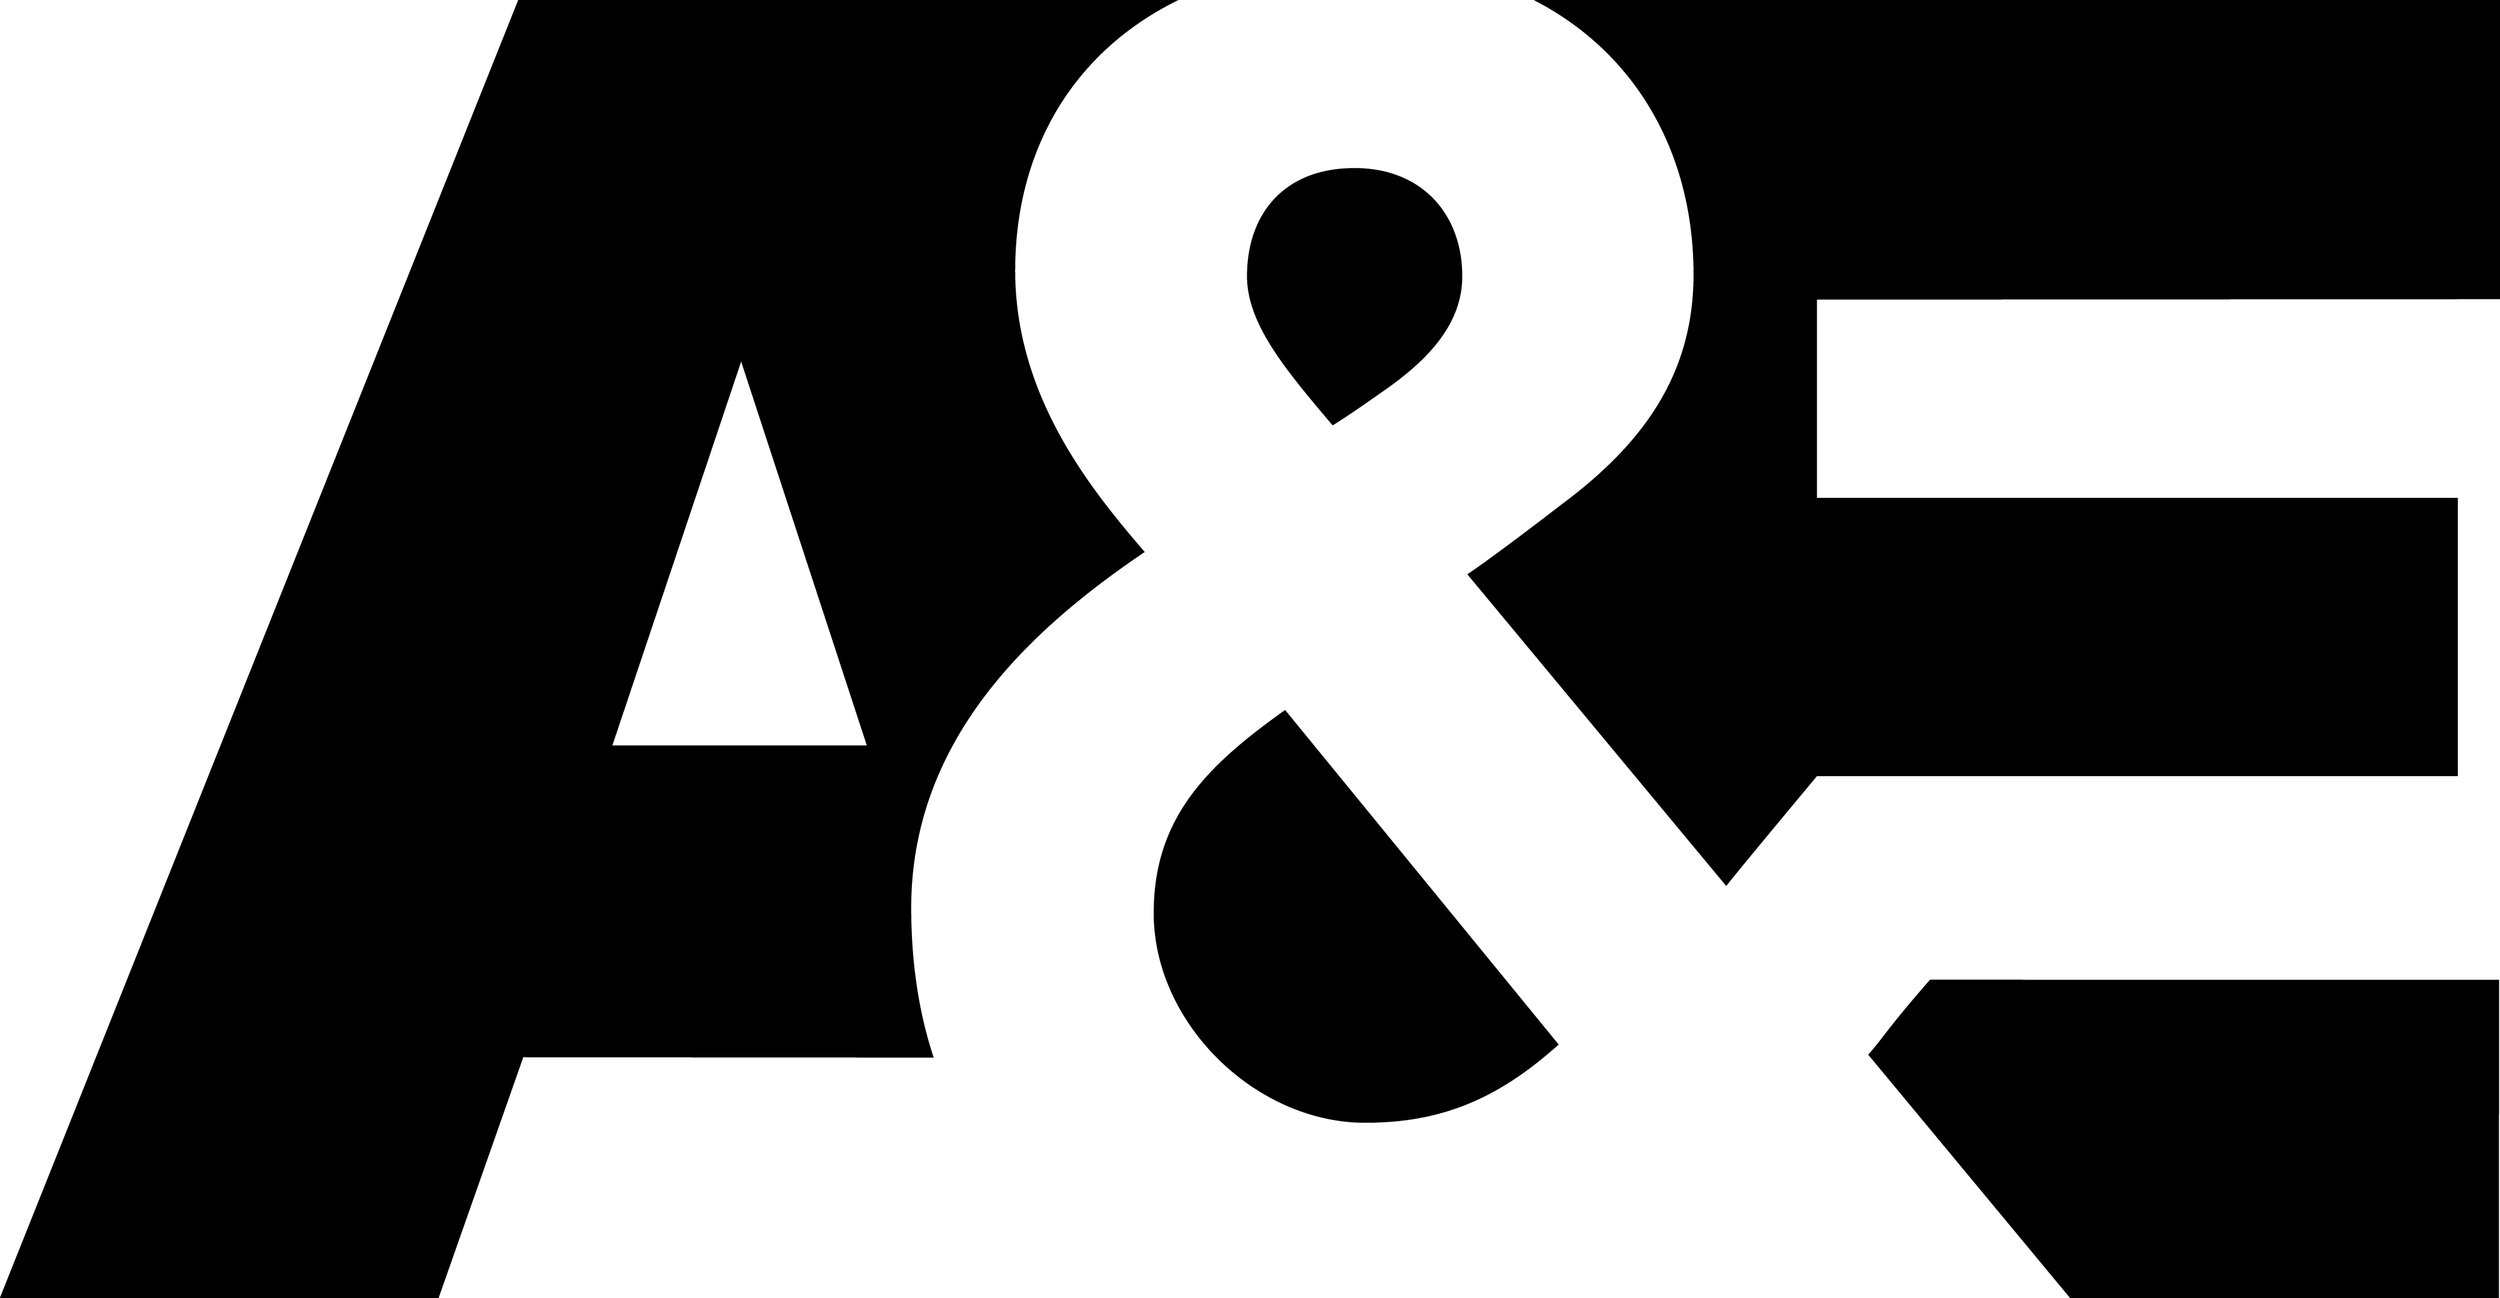 A&E_Network_logo.jpg